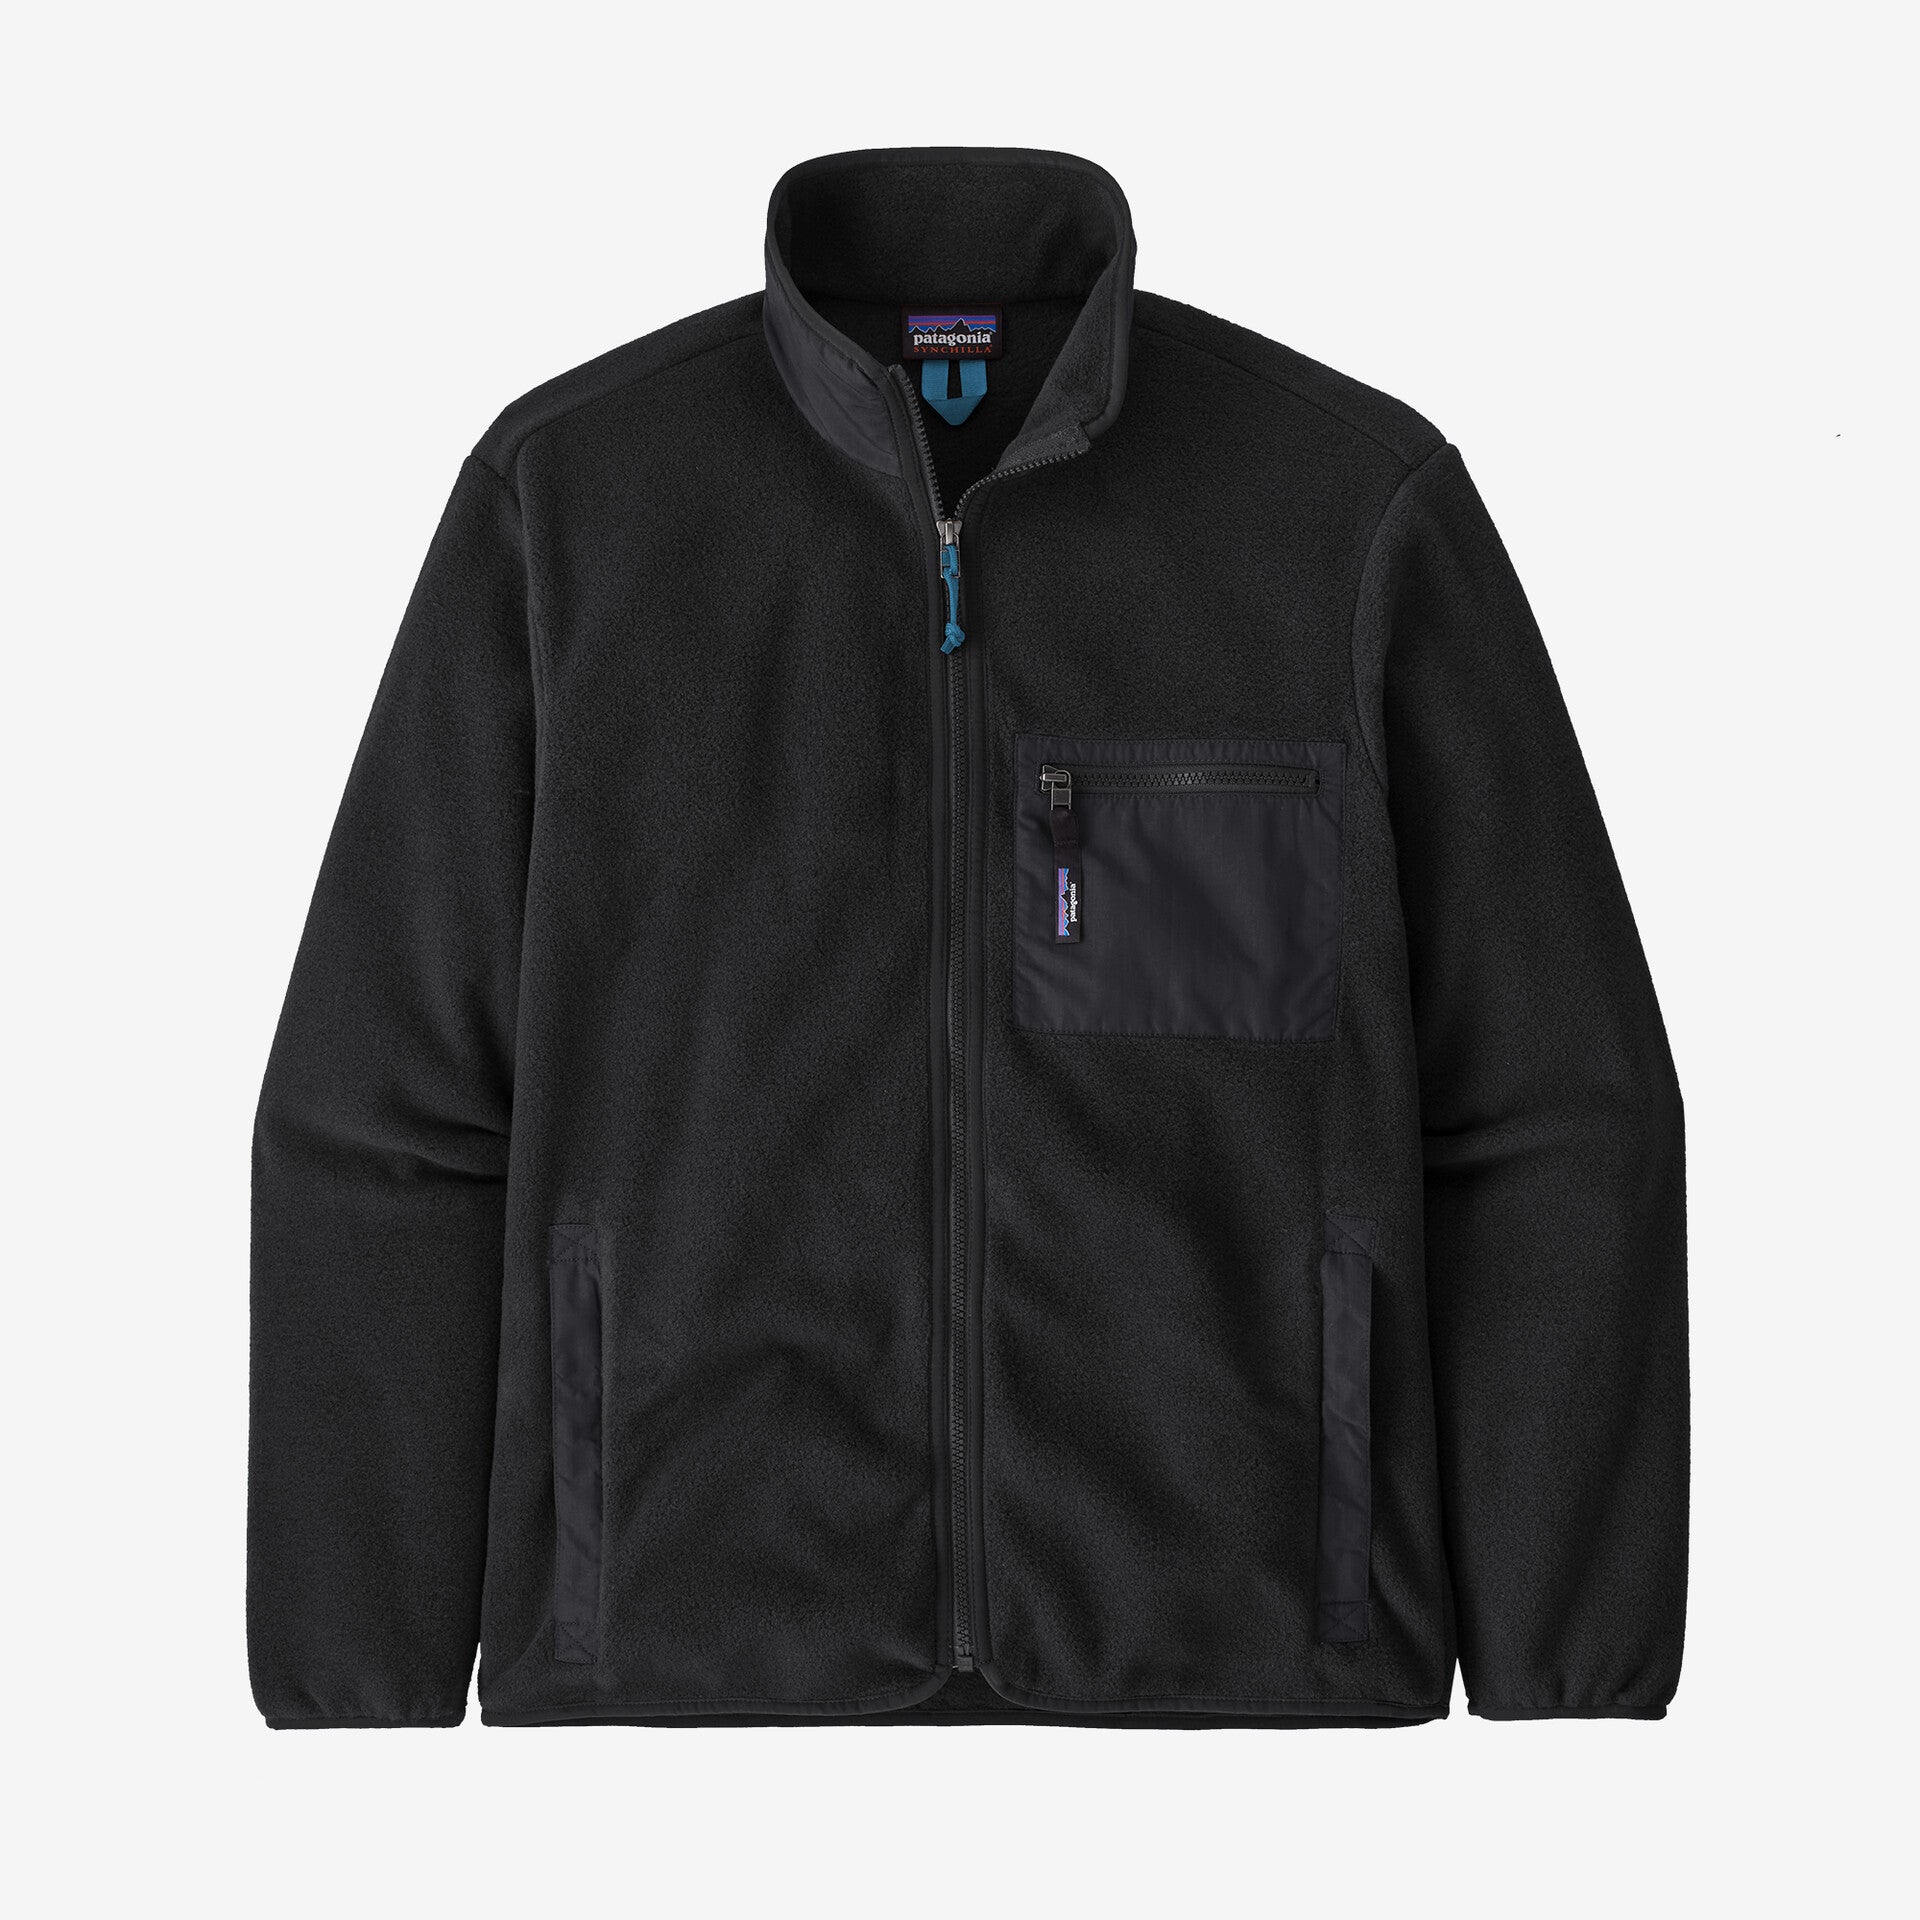 Patagonia Men's Synchilla Fleece Jacket